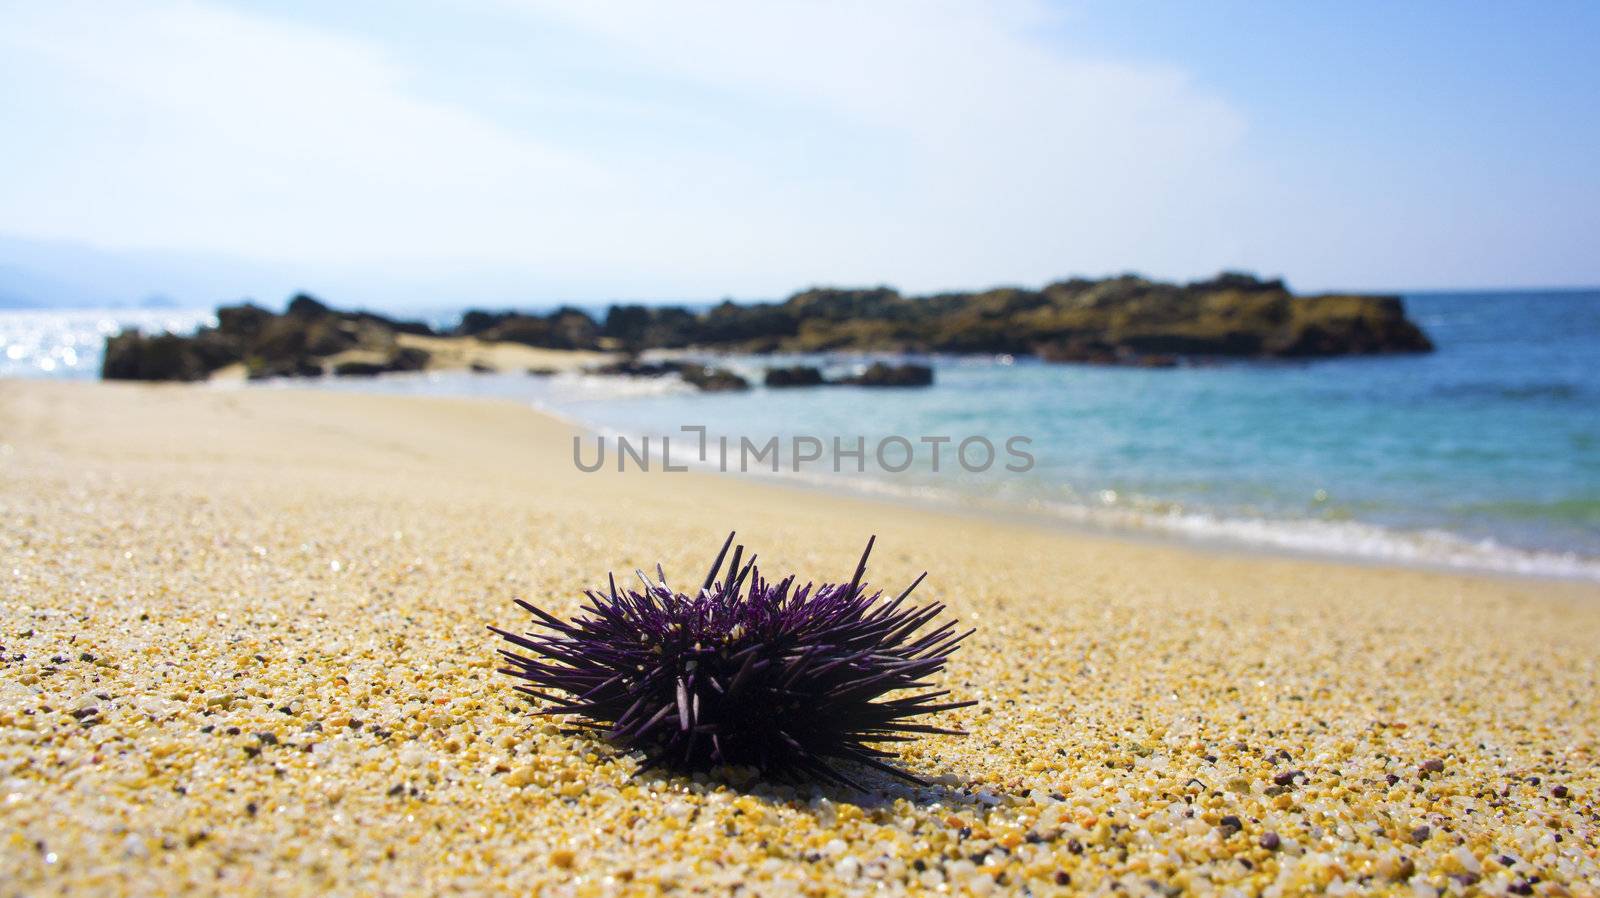 Closup of a purple seastar lying on the beach.